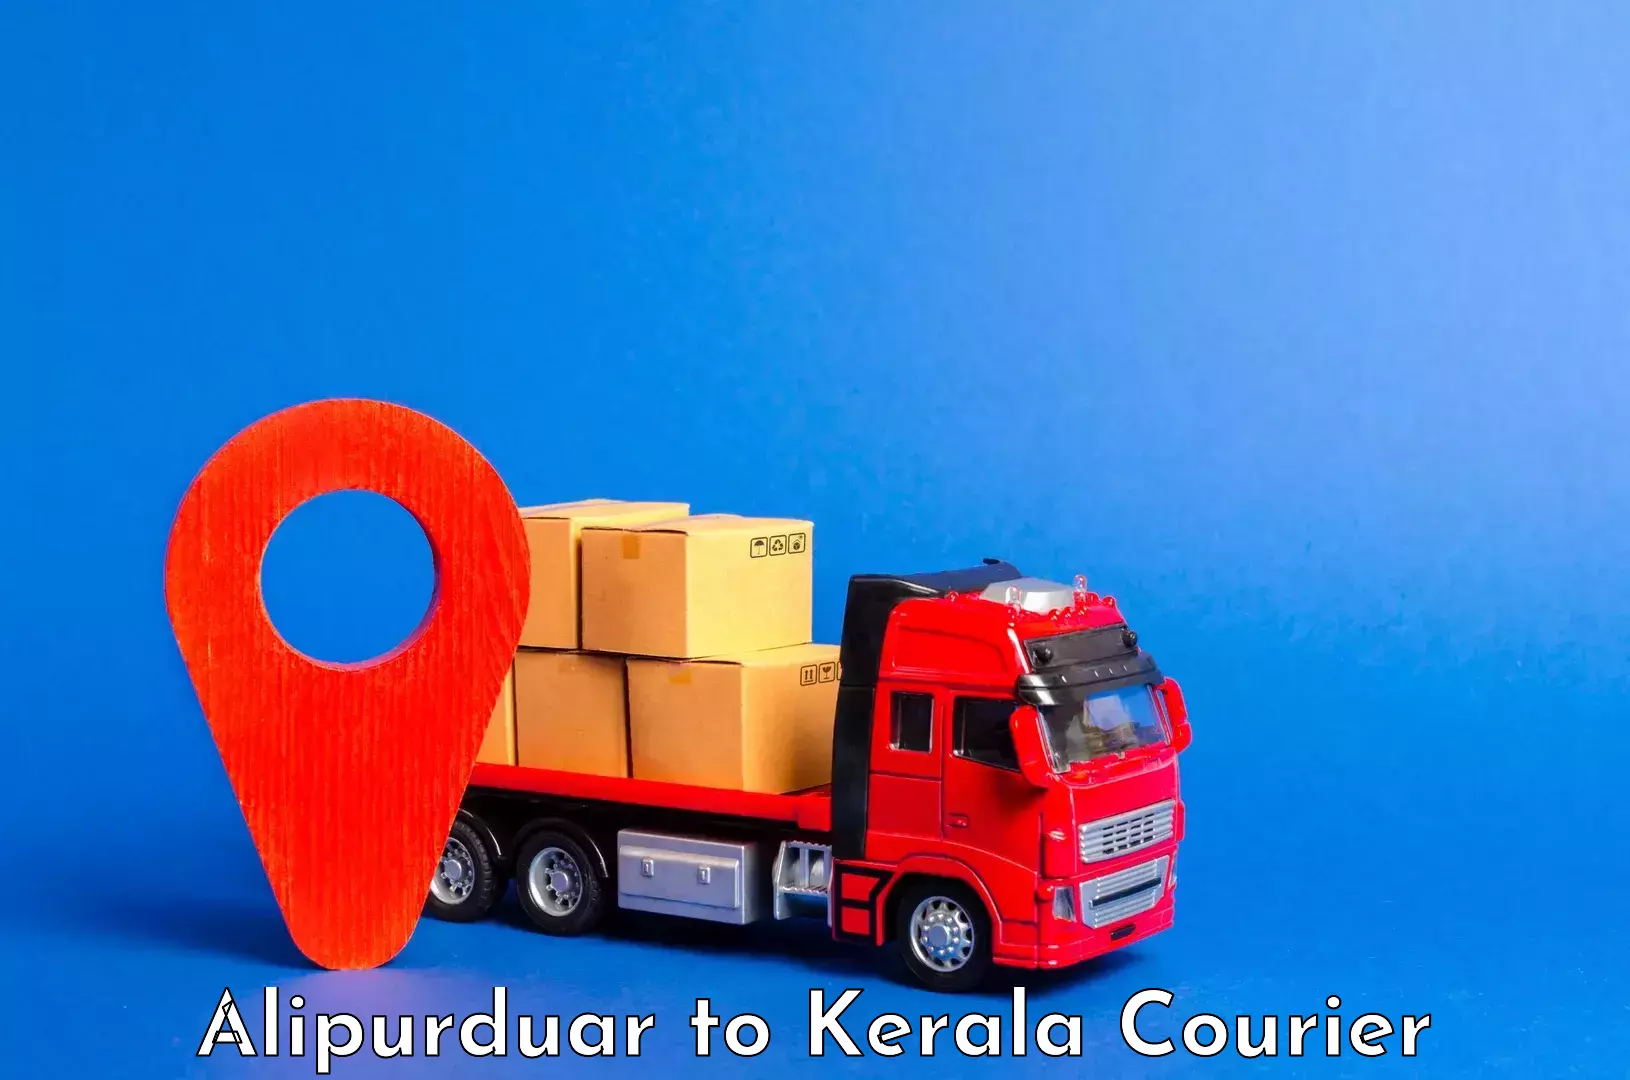 Luggage shipment specialists Alipurduar to Kozhikode